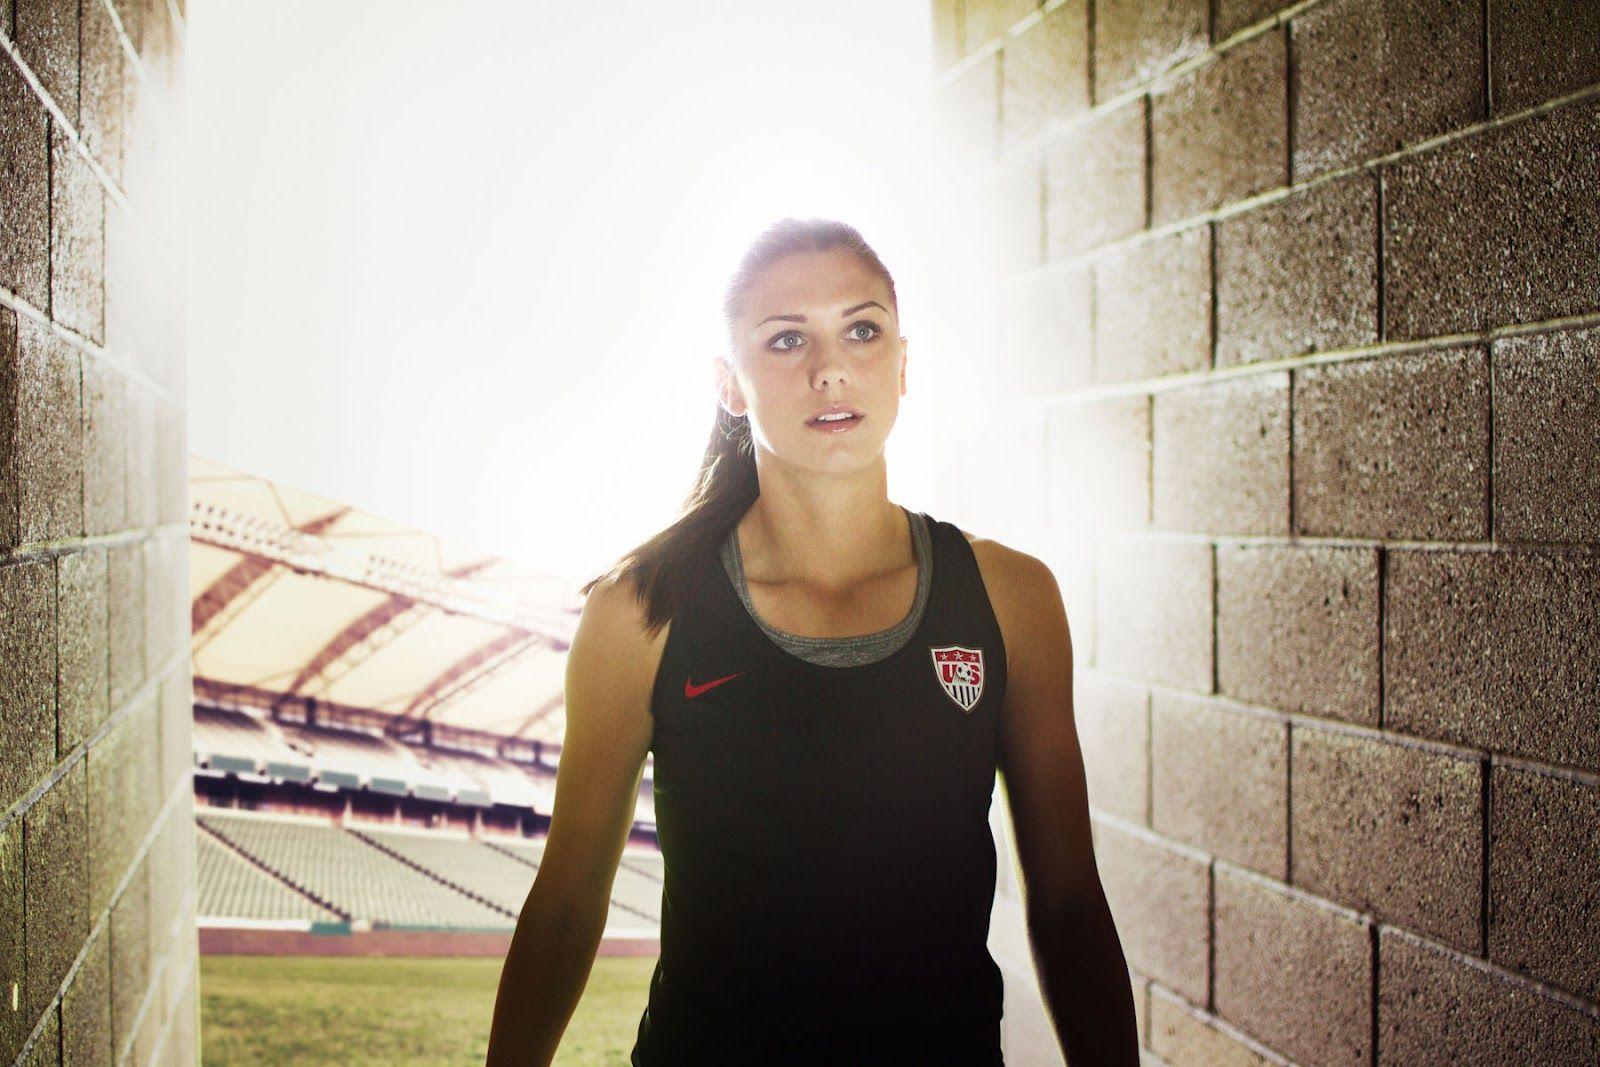 American women's soccer star Alex Morgan Wallpaper and Background